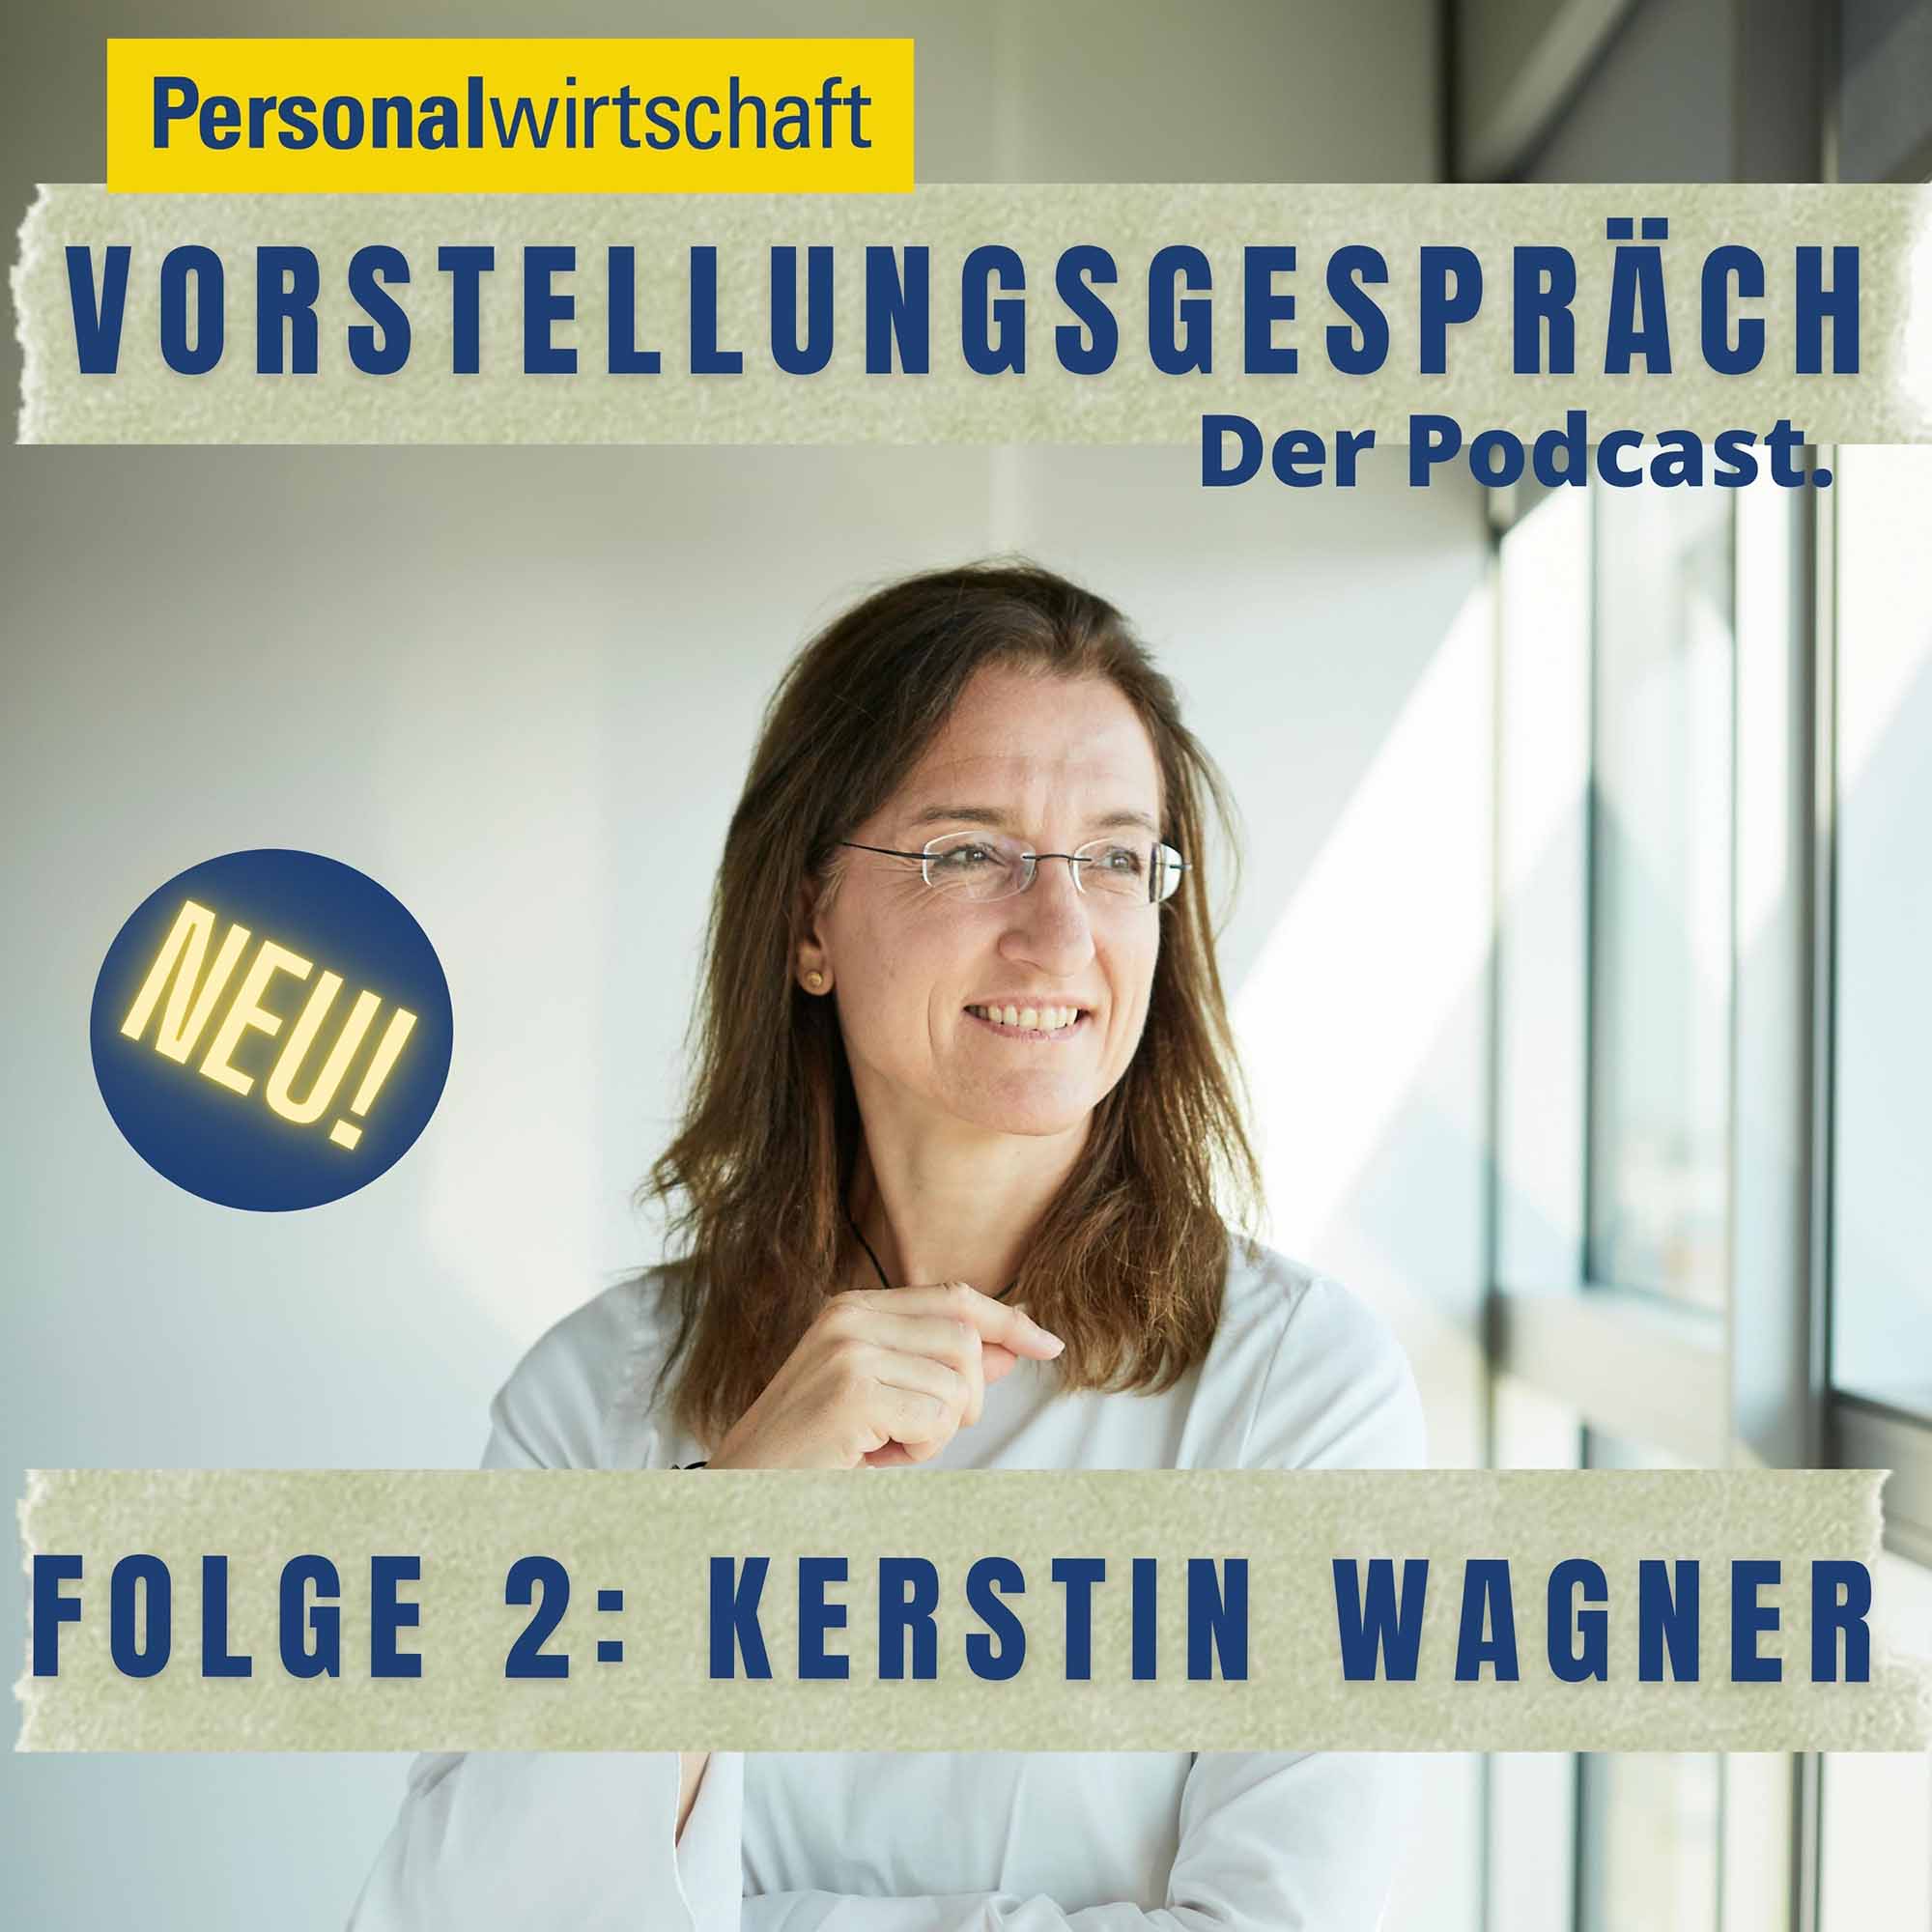 Folge 2: Kerstin Wagner – Die begeisterte Entdeckerin